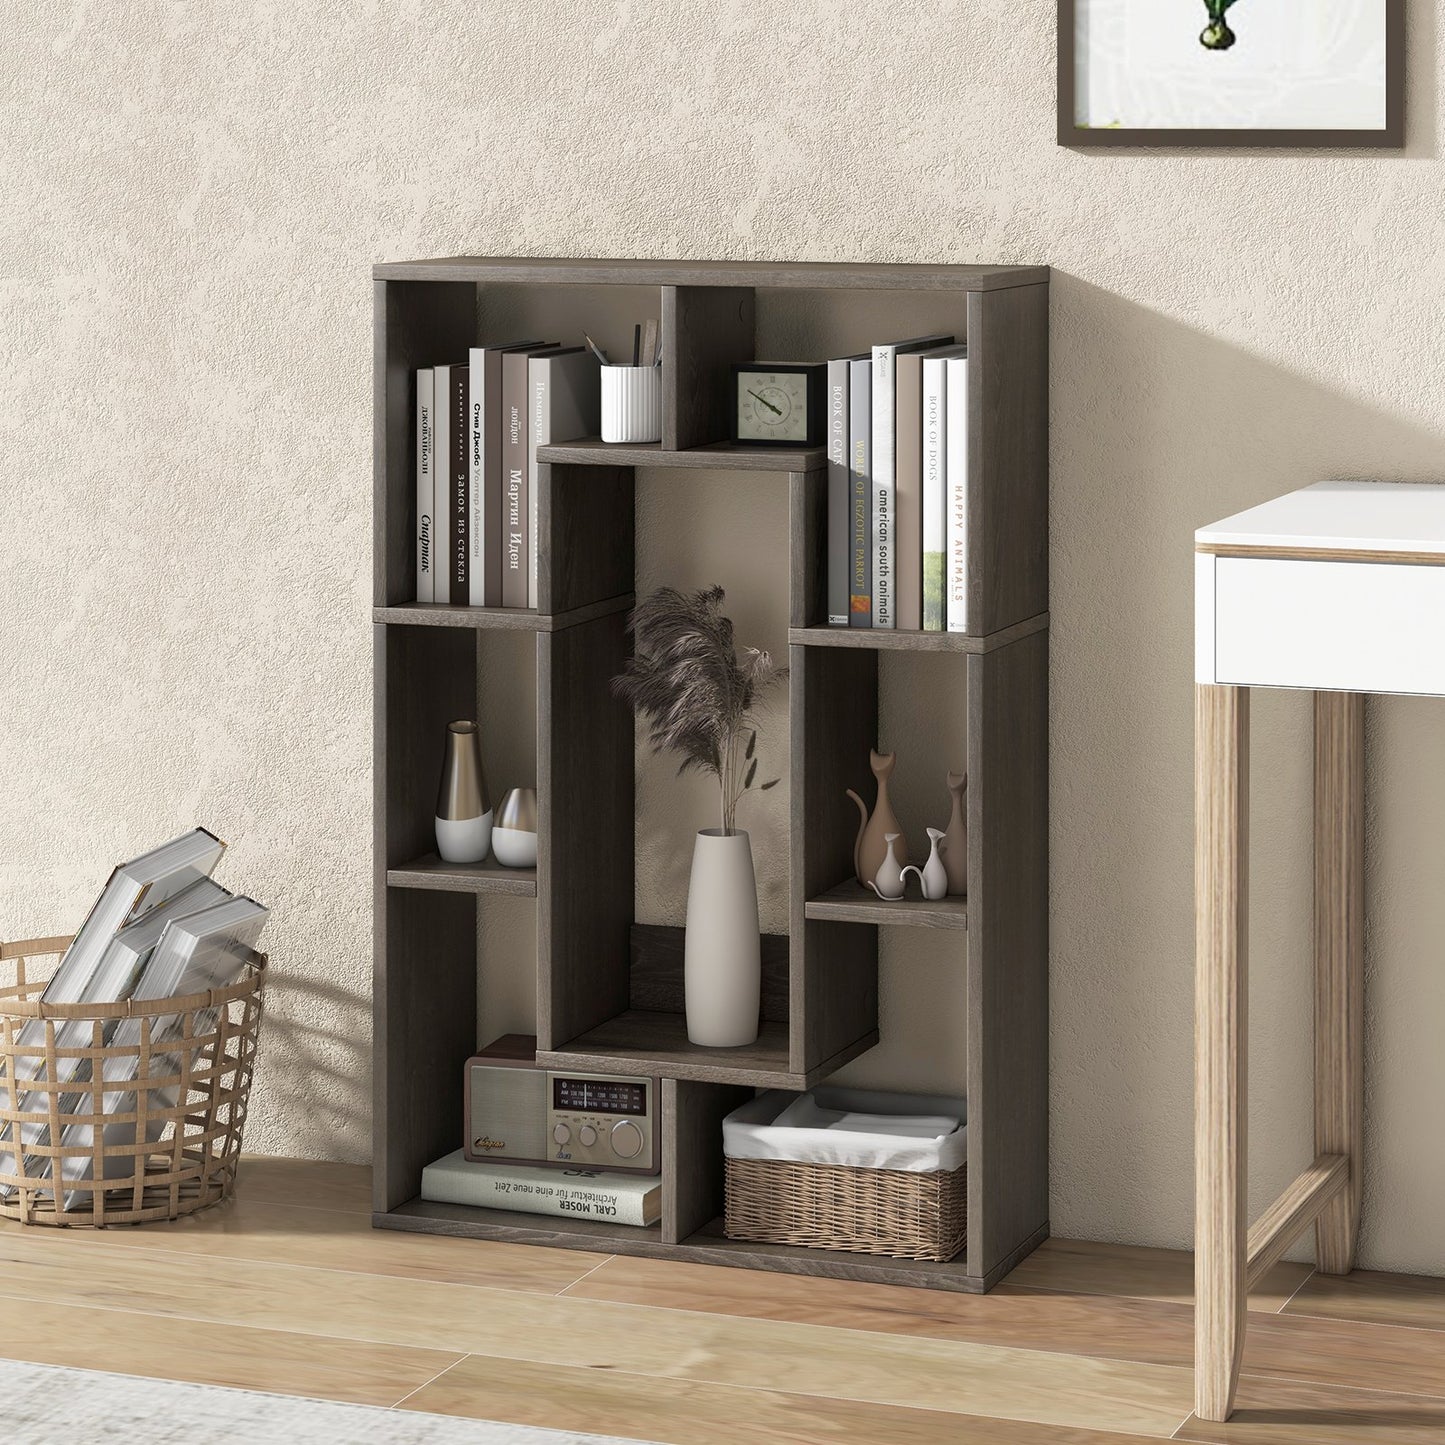 7-Cube Geometric Bookshelf Modern Decorative Open Bookcase, Gray